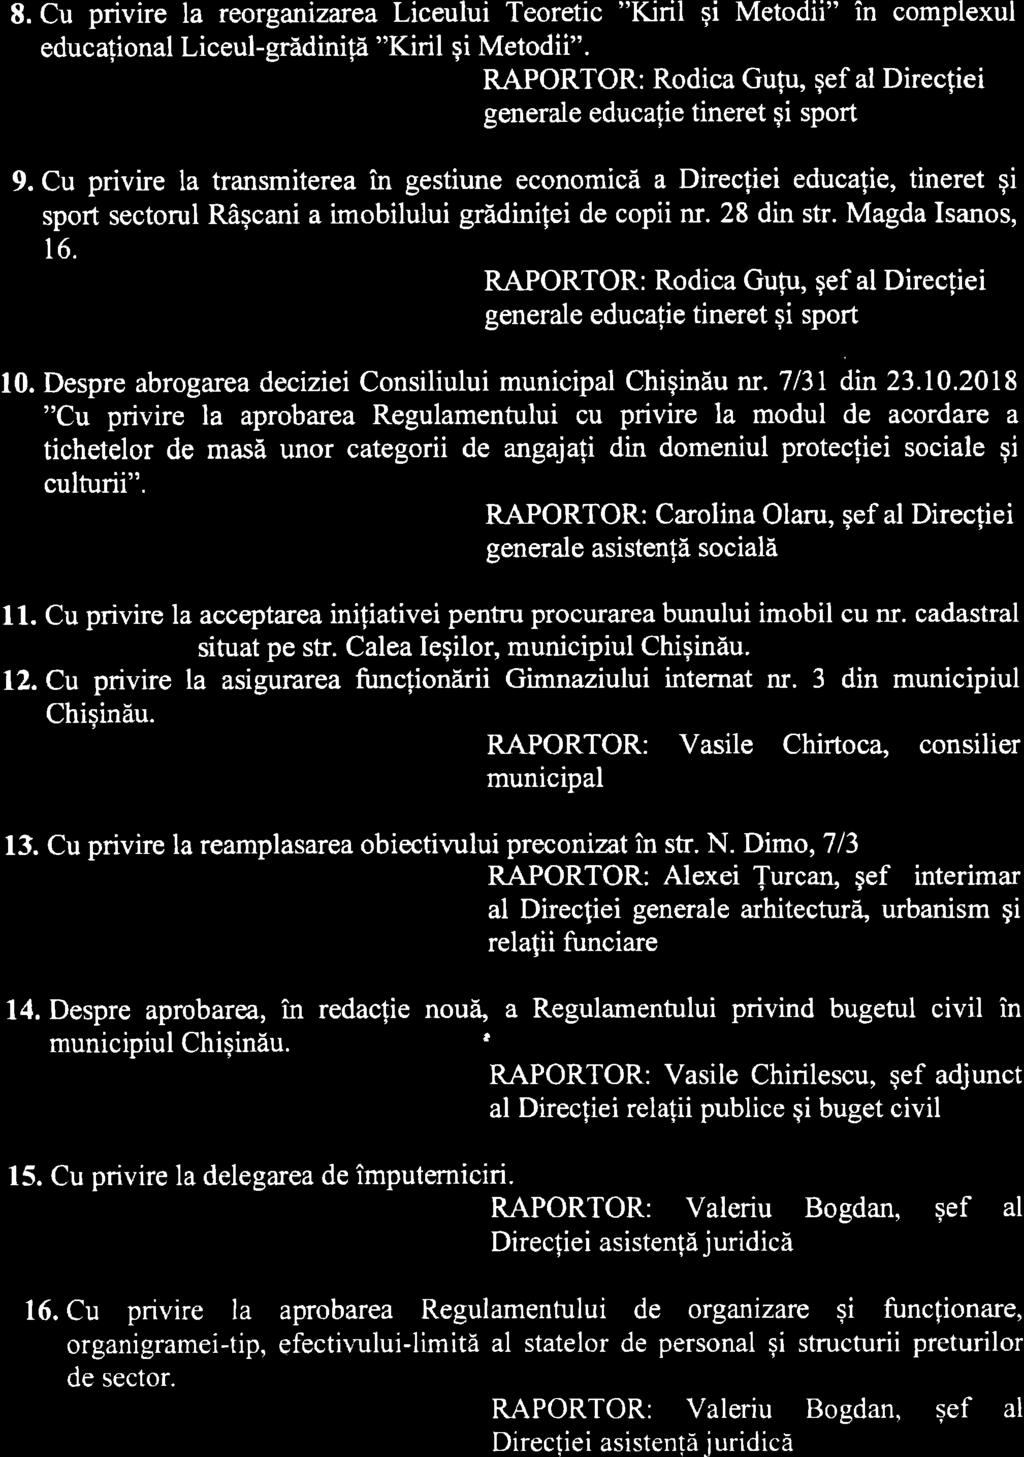 8. Cu privire la reorganlzarea Liceului Teoretic "Kiril gi Metodii" in complexul educalional Liceul-grddinifd "Kiril gi Metodii".